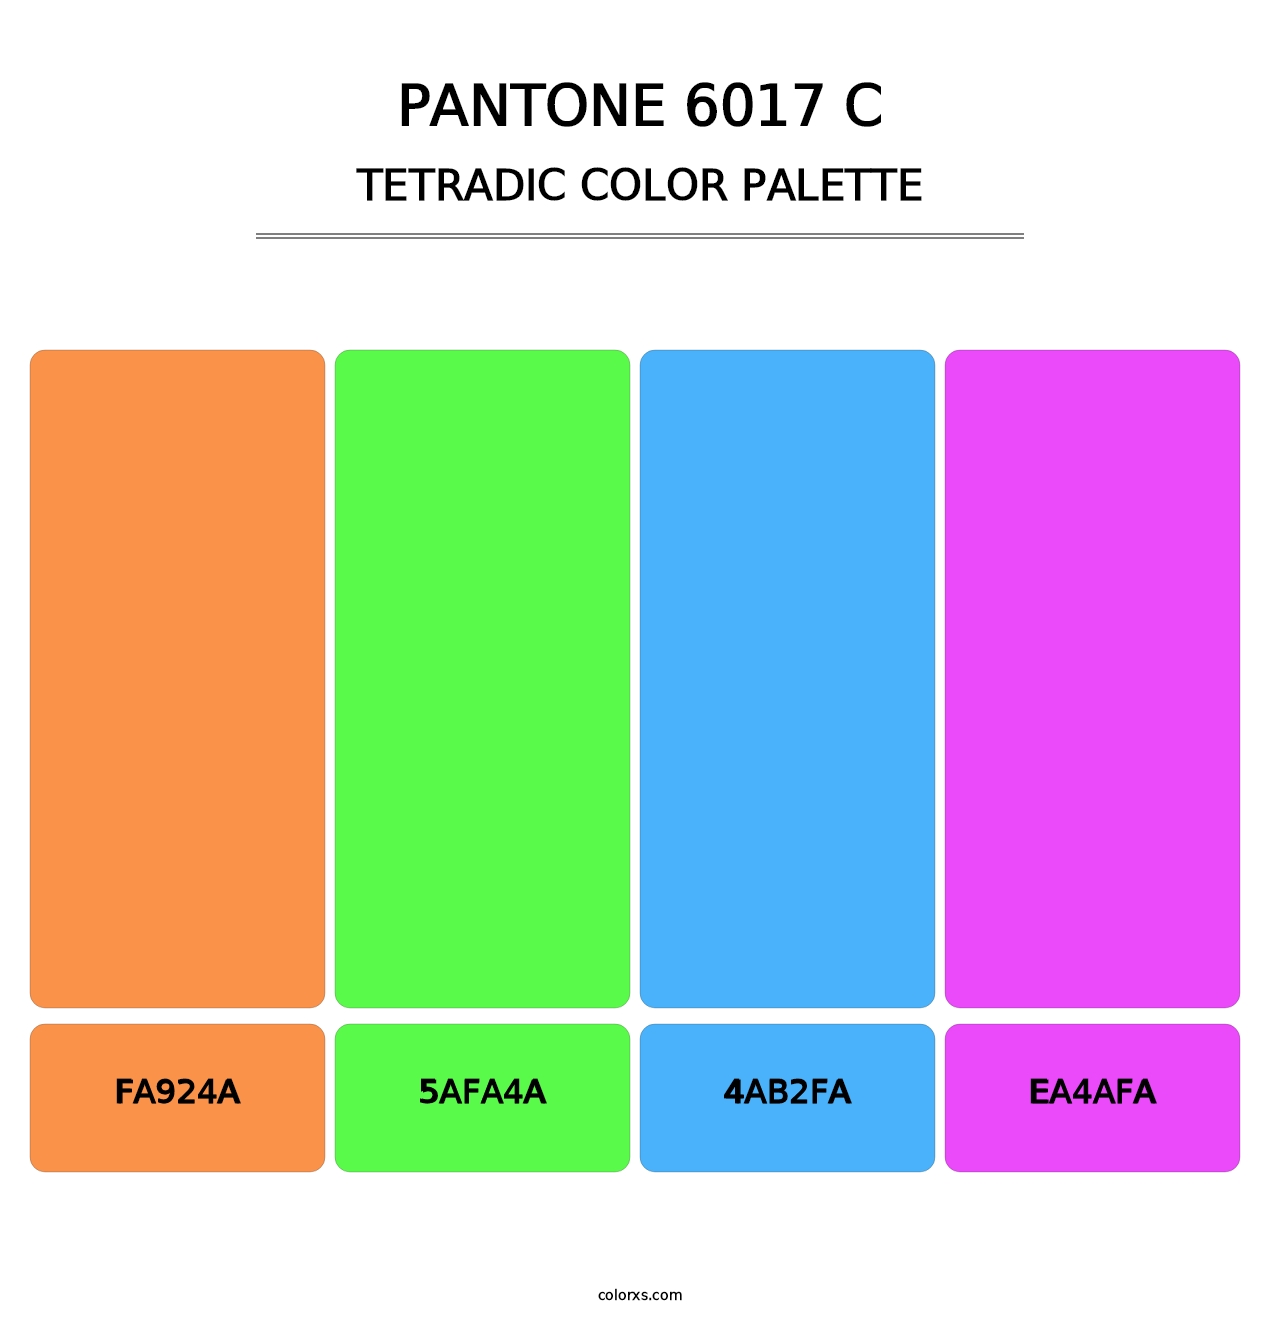 PANTONE 6017 C - Tetradic Color Palette